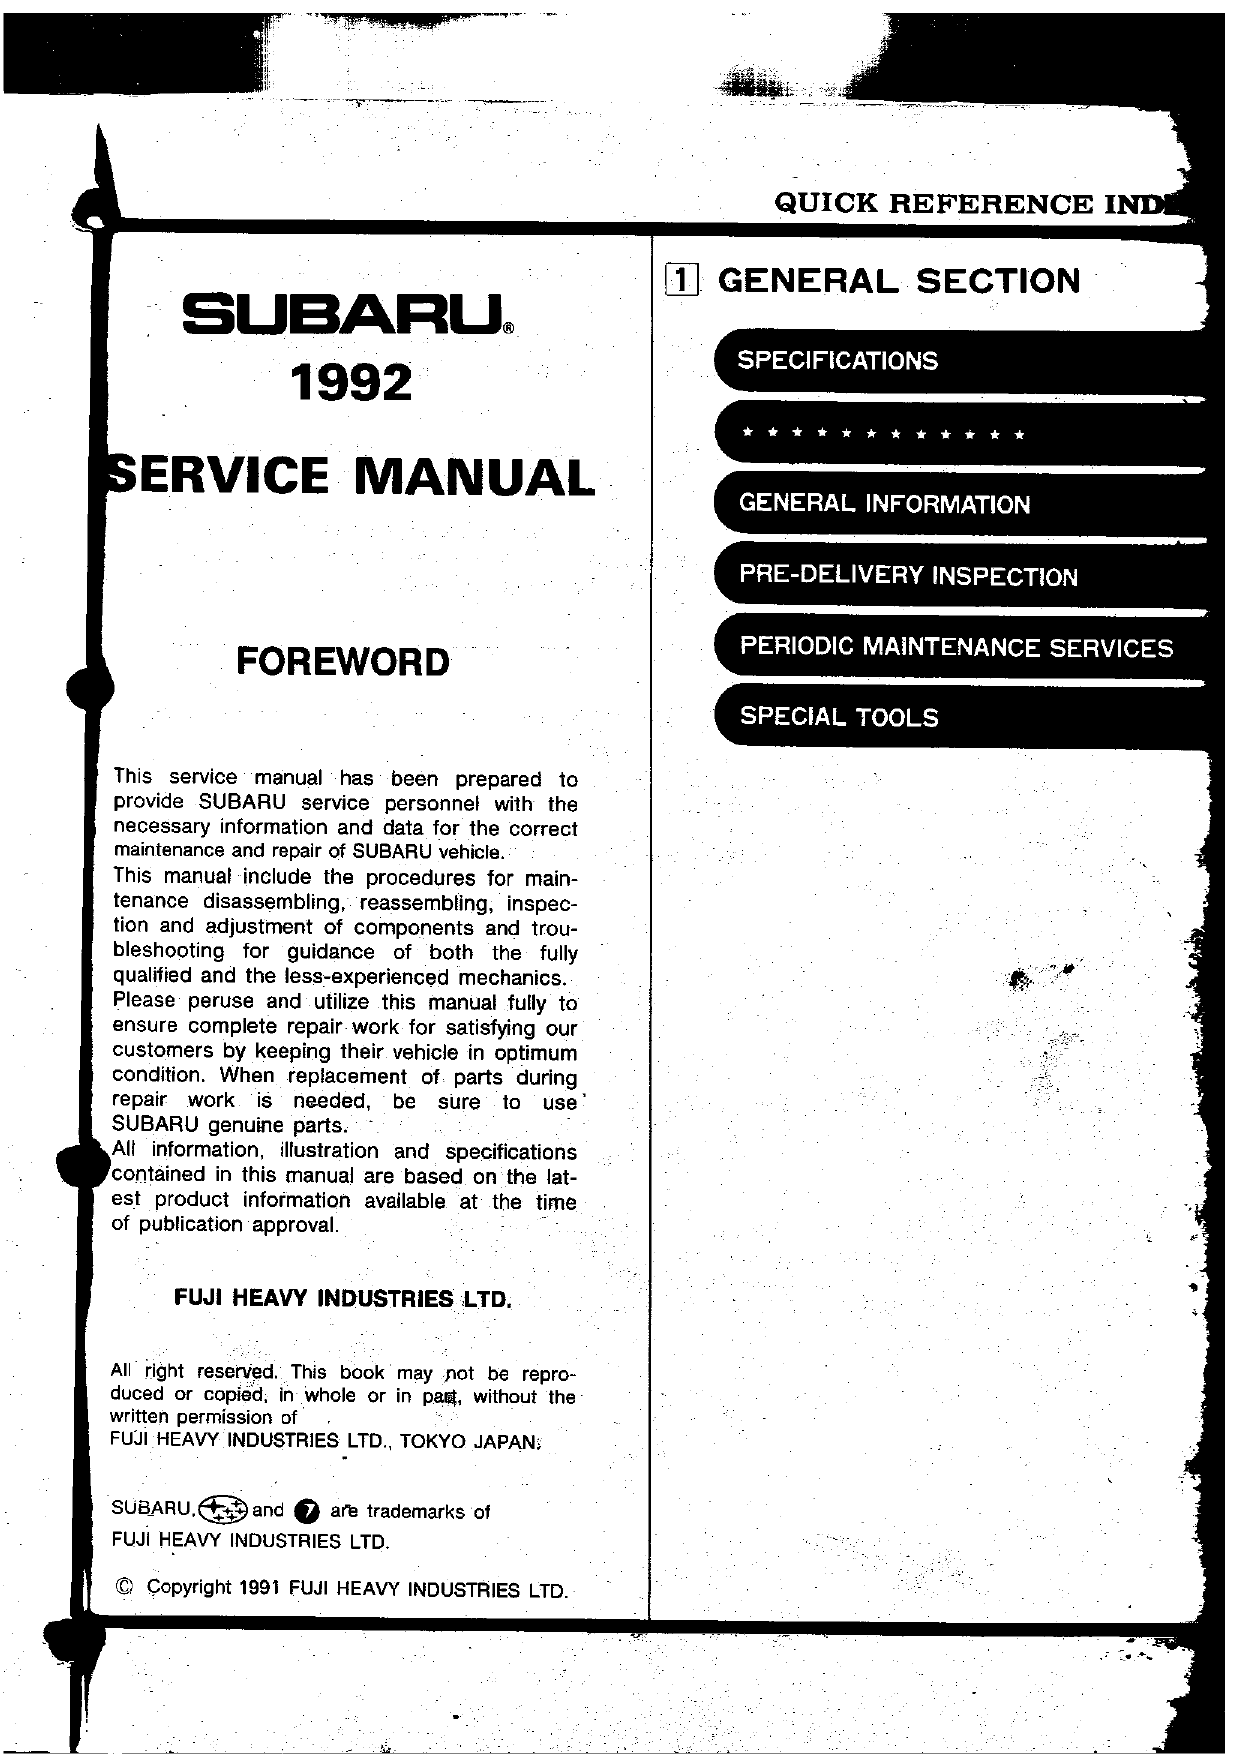 1992 Subaru Legacy service manual Preview image 2